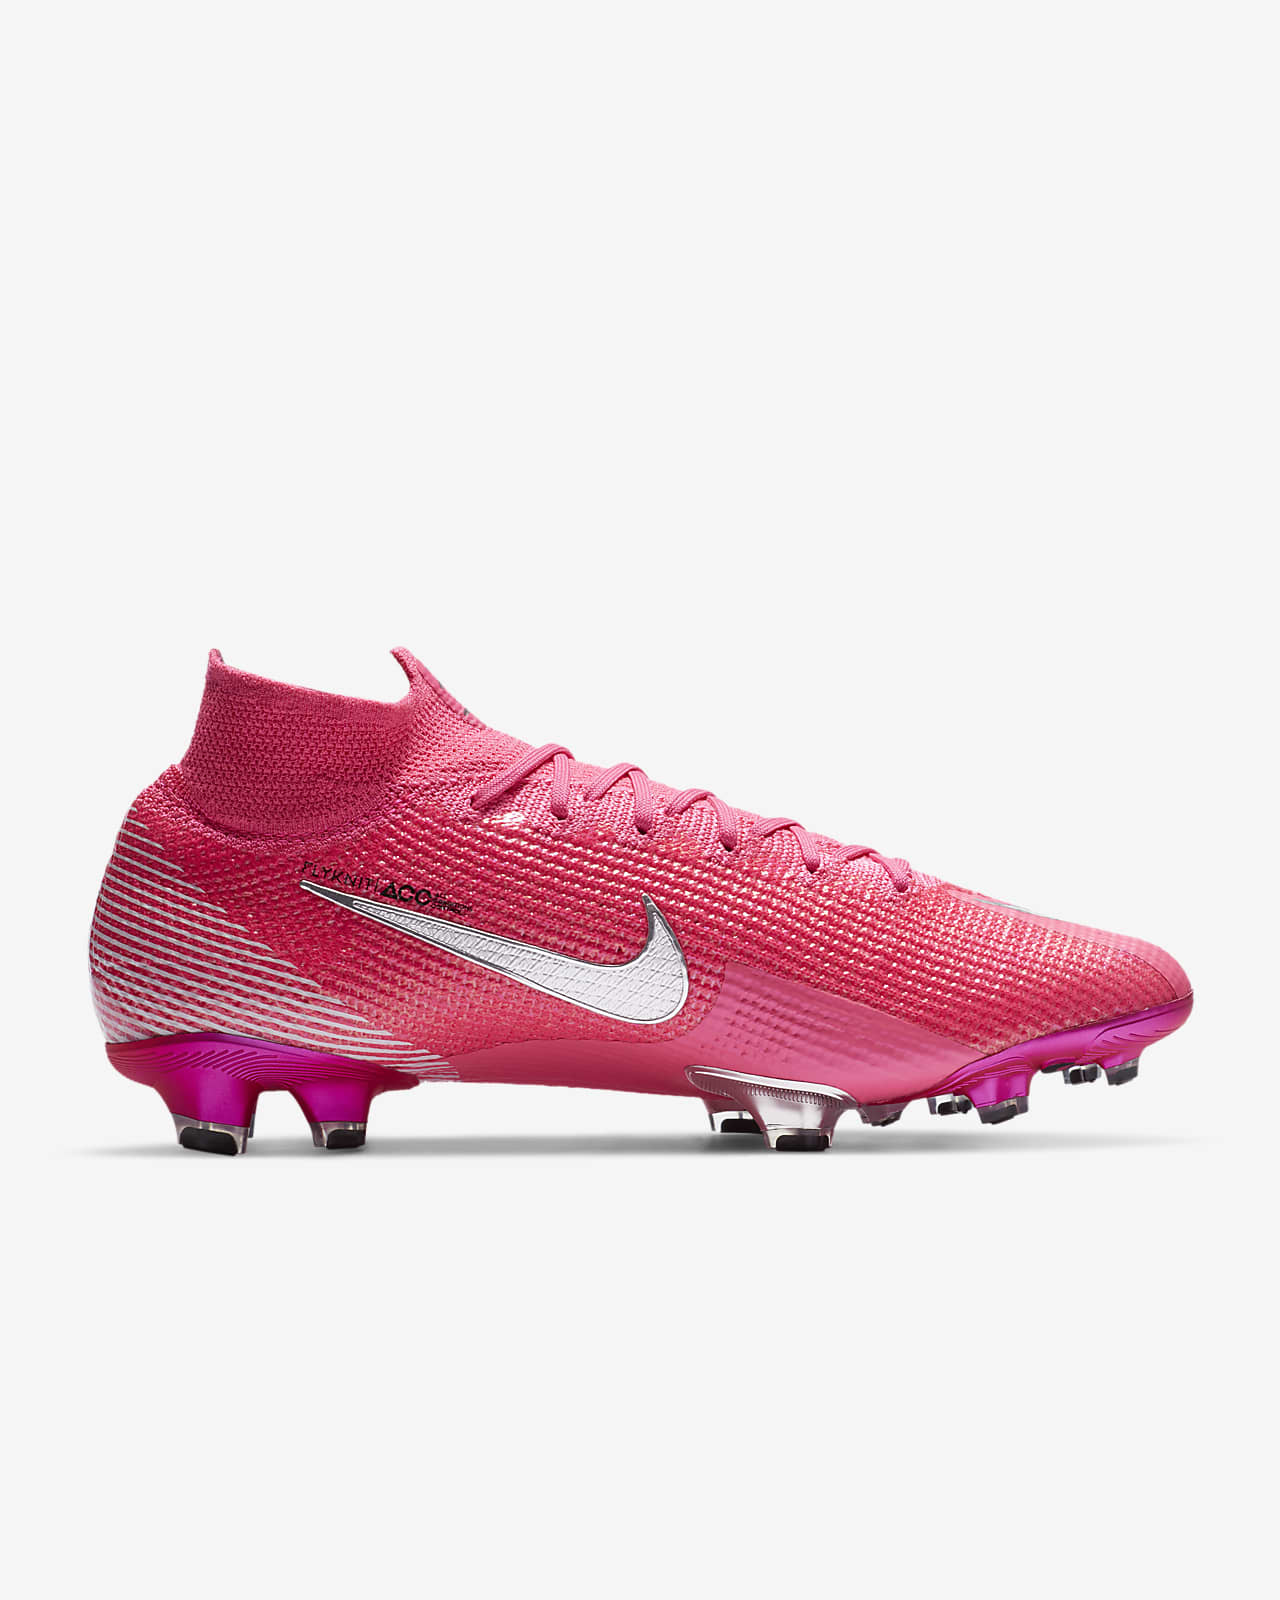 botas de futbol nike rosas